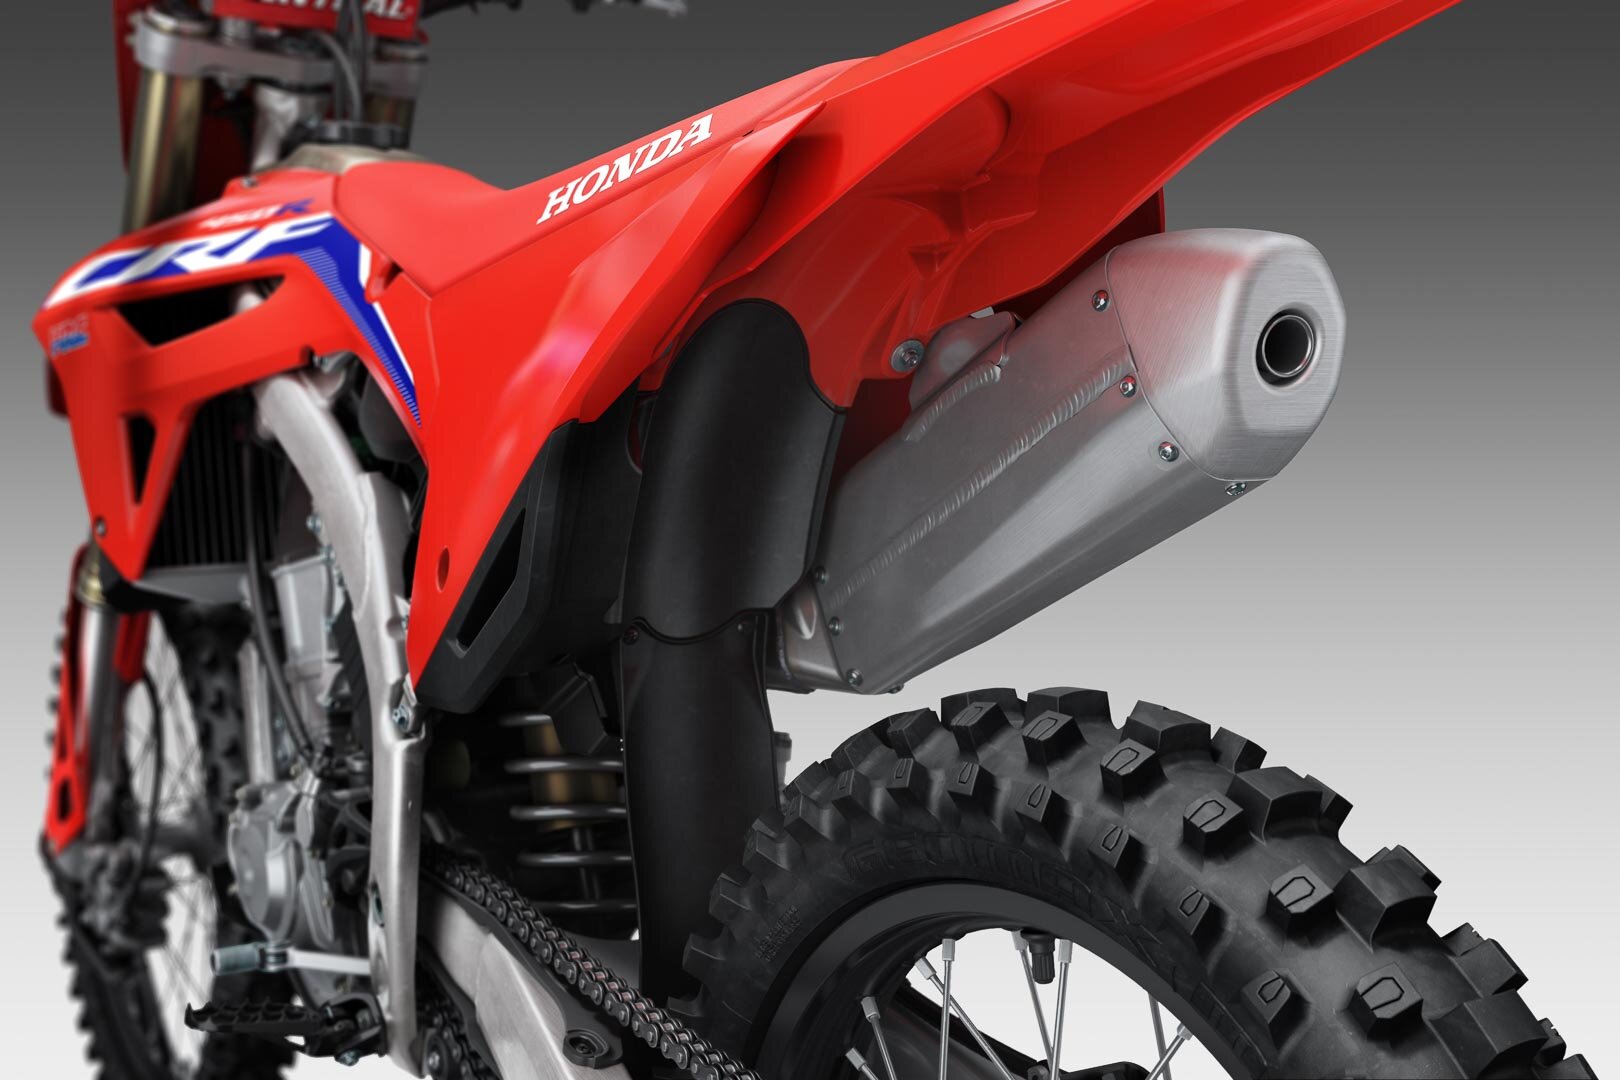 2021-Honda-CRF450R-First-Look-motocross-supercross-motorcycle-2.jpg